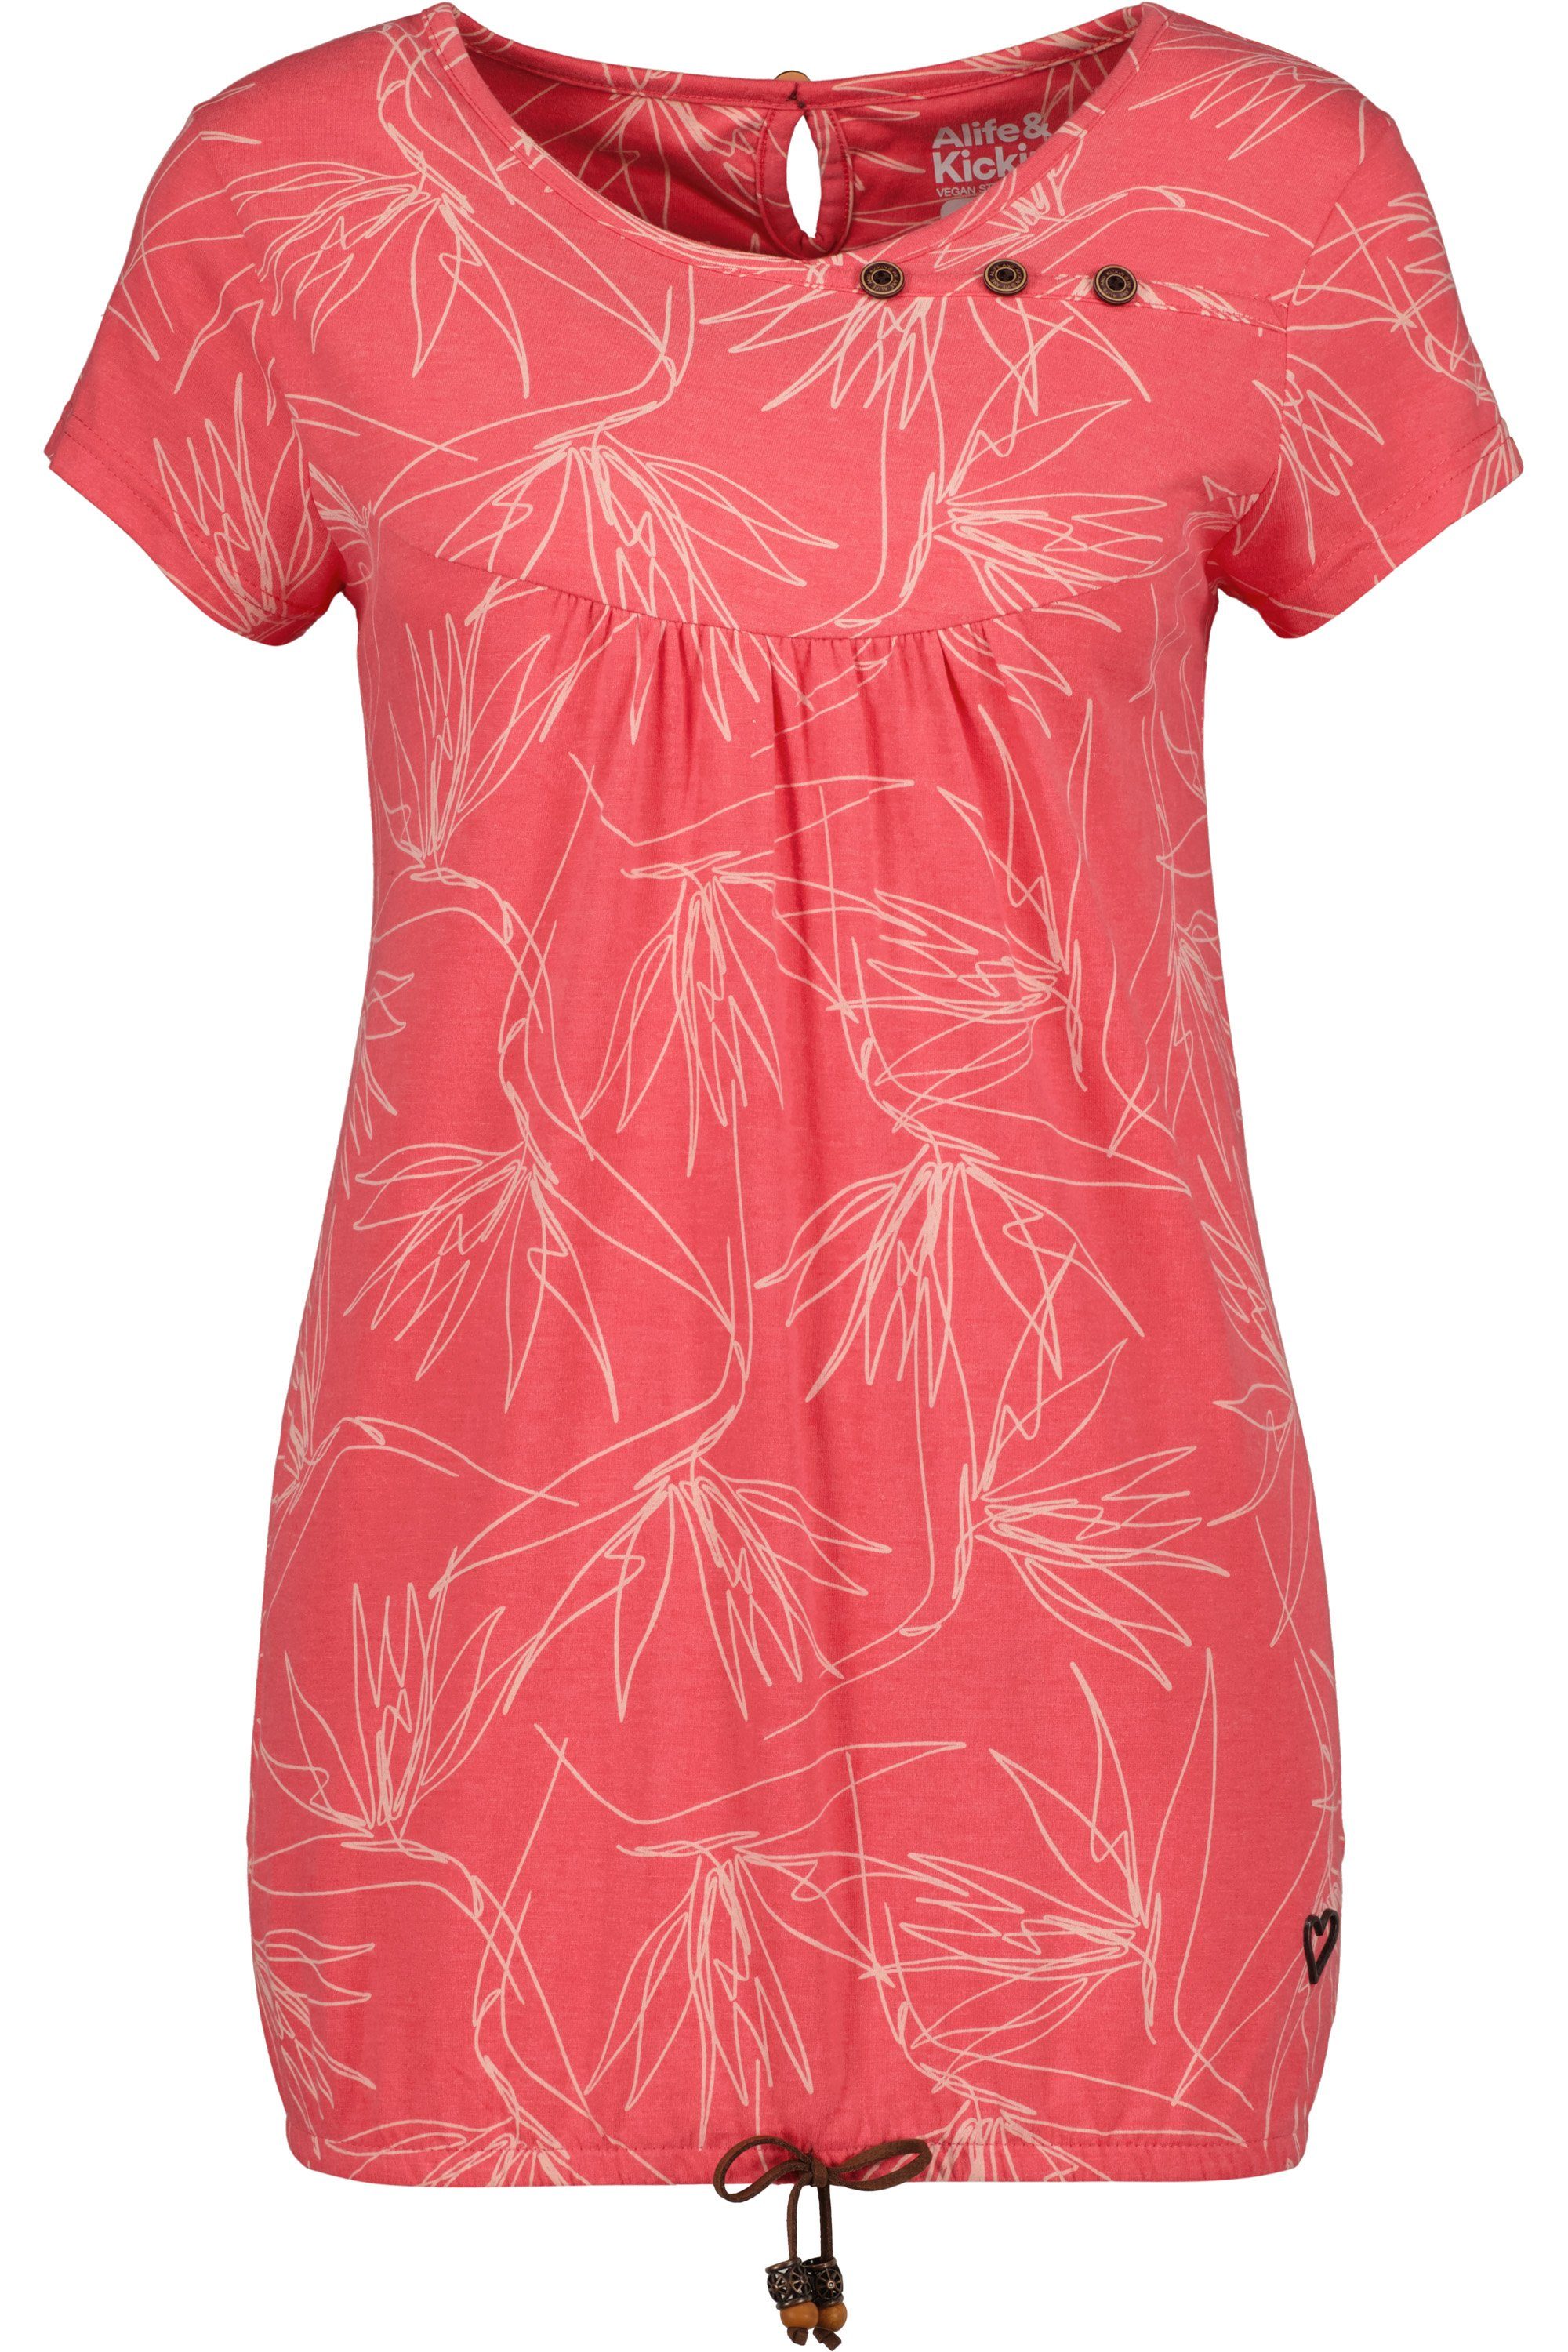 Shirt Damen & B Rundhalsshirt SummerAK Kickin Alife melange coral Kurzarmshirt, Shirt